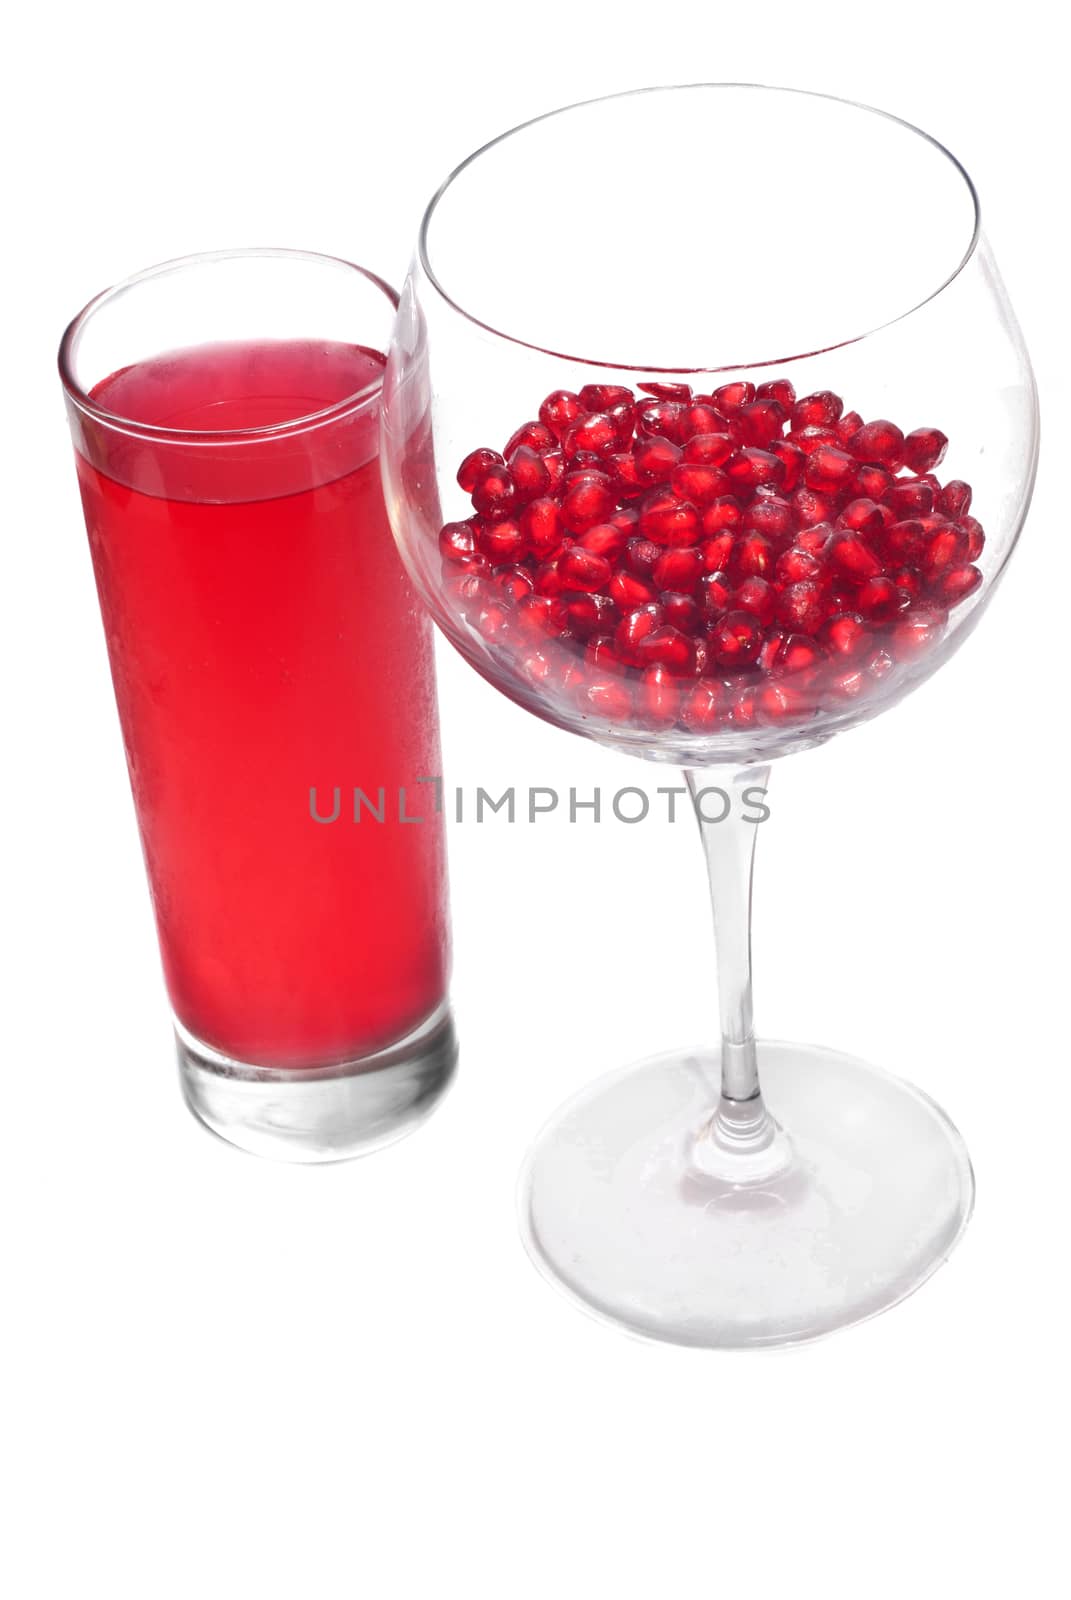 fresh grains and juice pomegranate in glass by gandolfocannatella